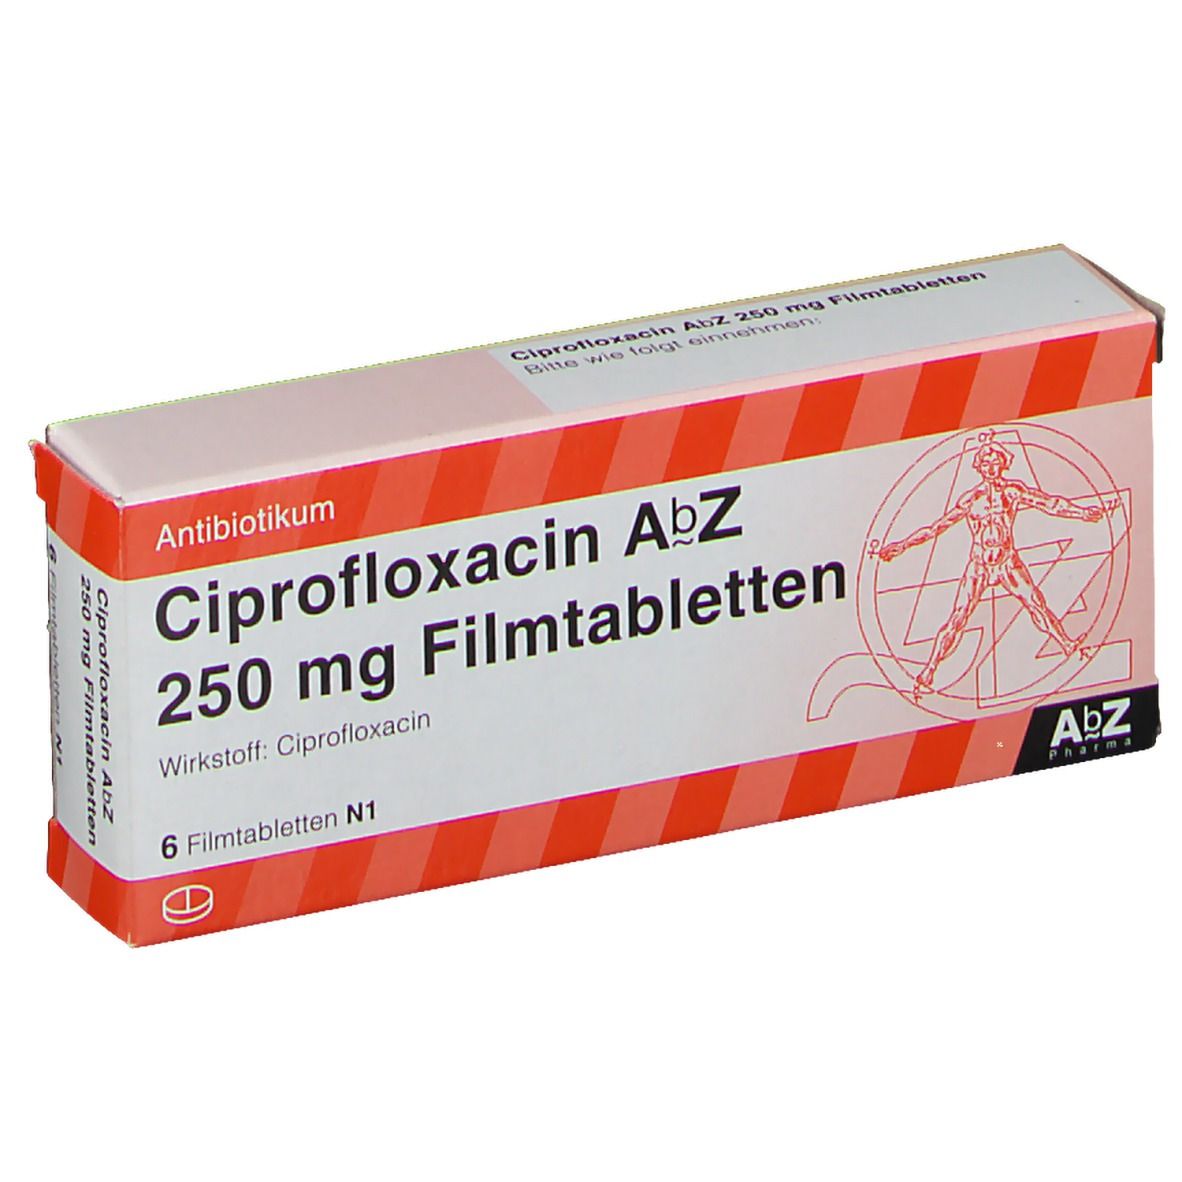 Ciprofloxacin AbZ 250 mg